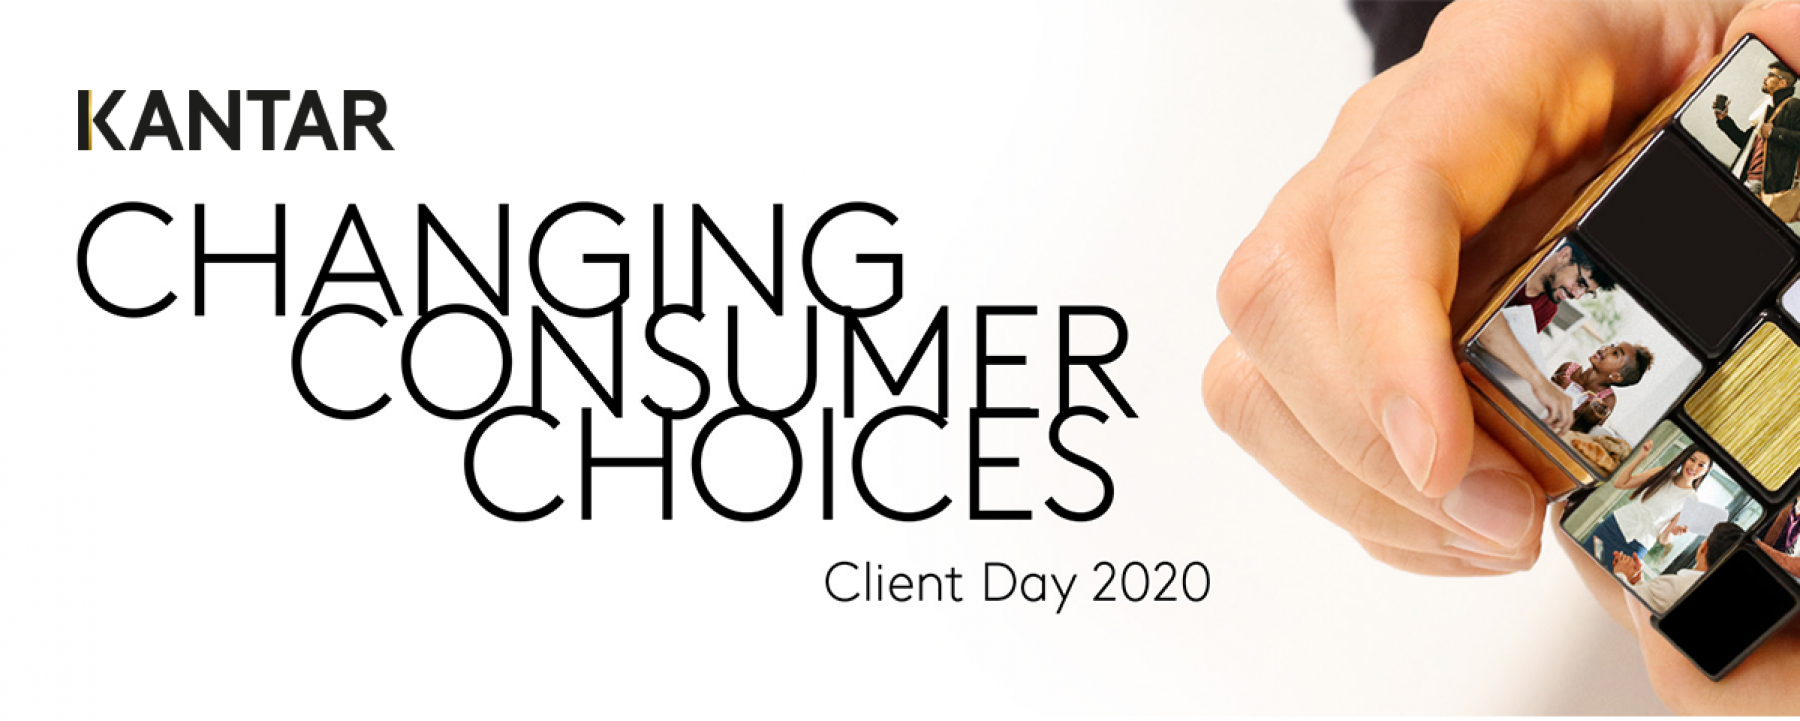 Consumer day 2020 organisé par Kantar